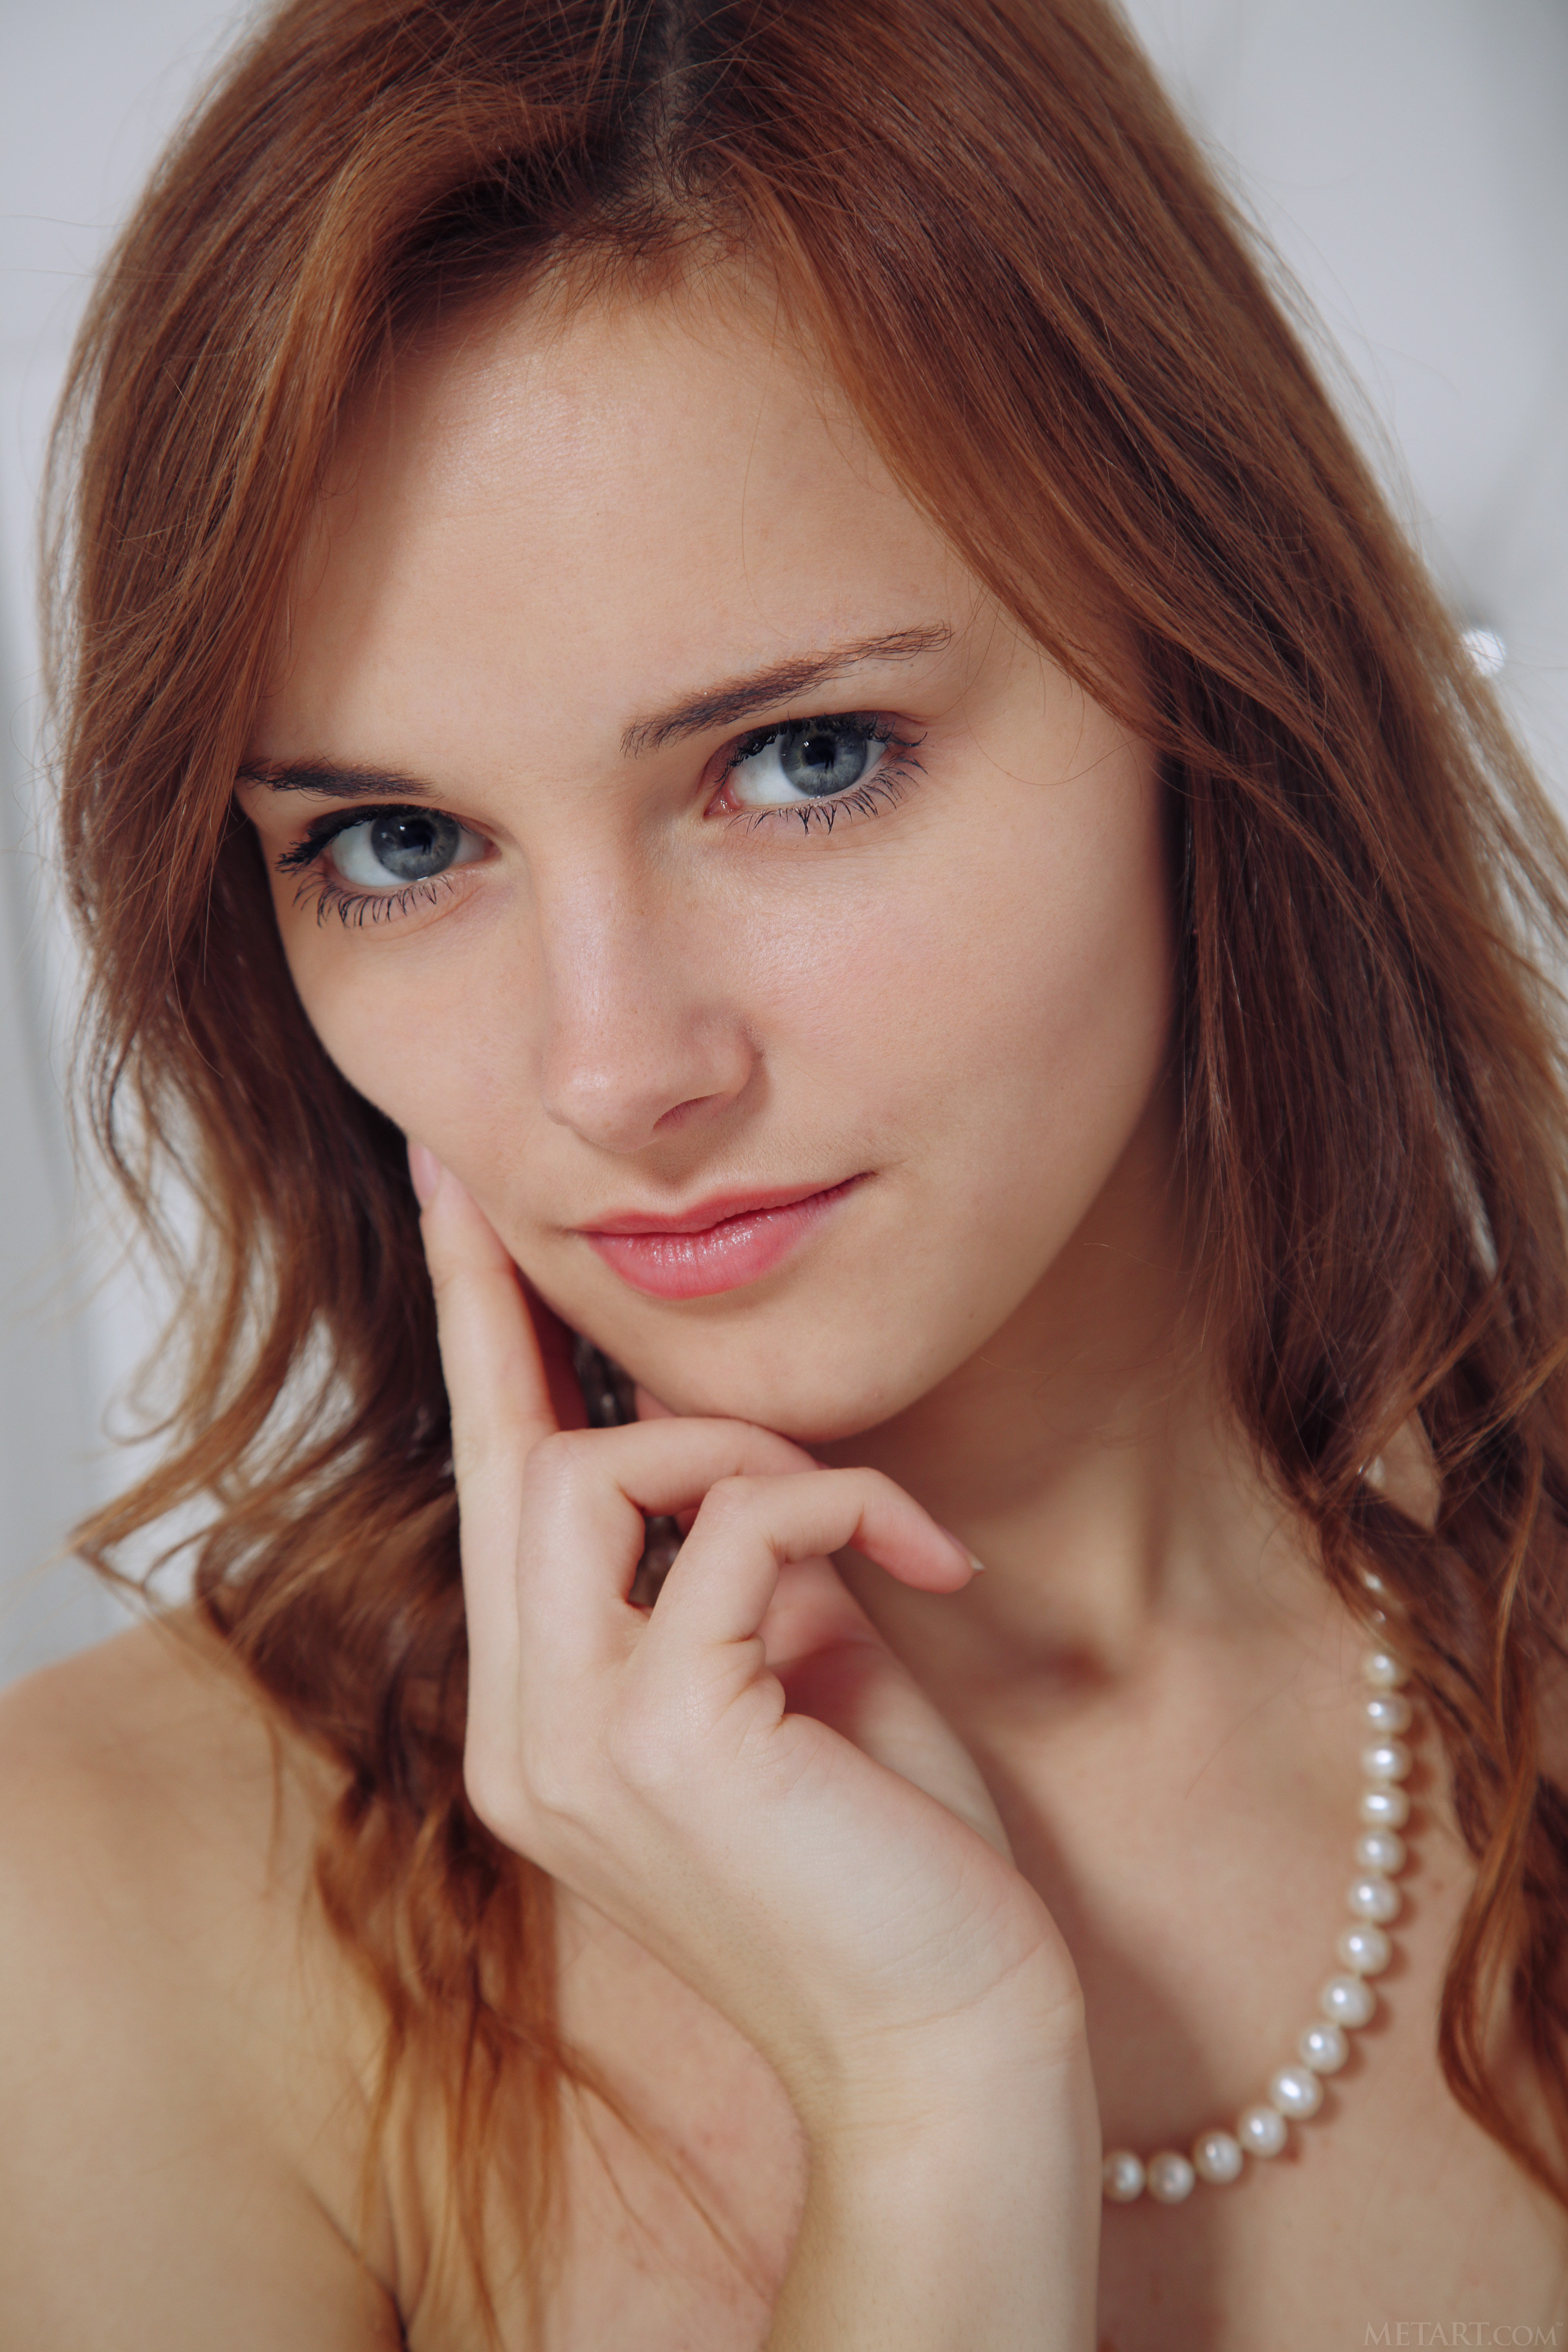 Eyes Women Model Brunette Blue Eyes Makeup Pearl Necklace Touching Face Portrait Women Indoors 2883x4324